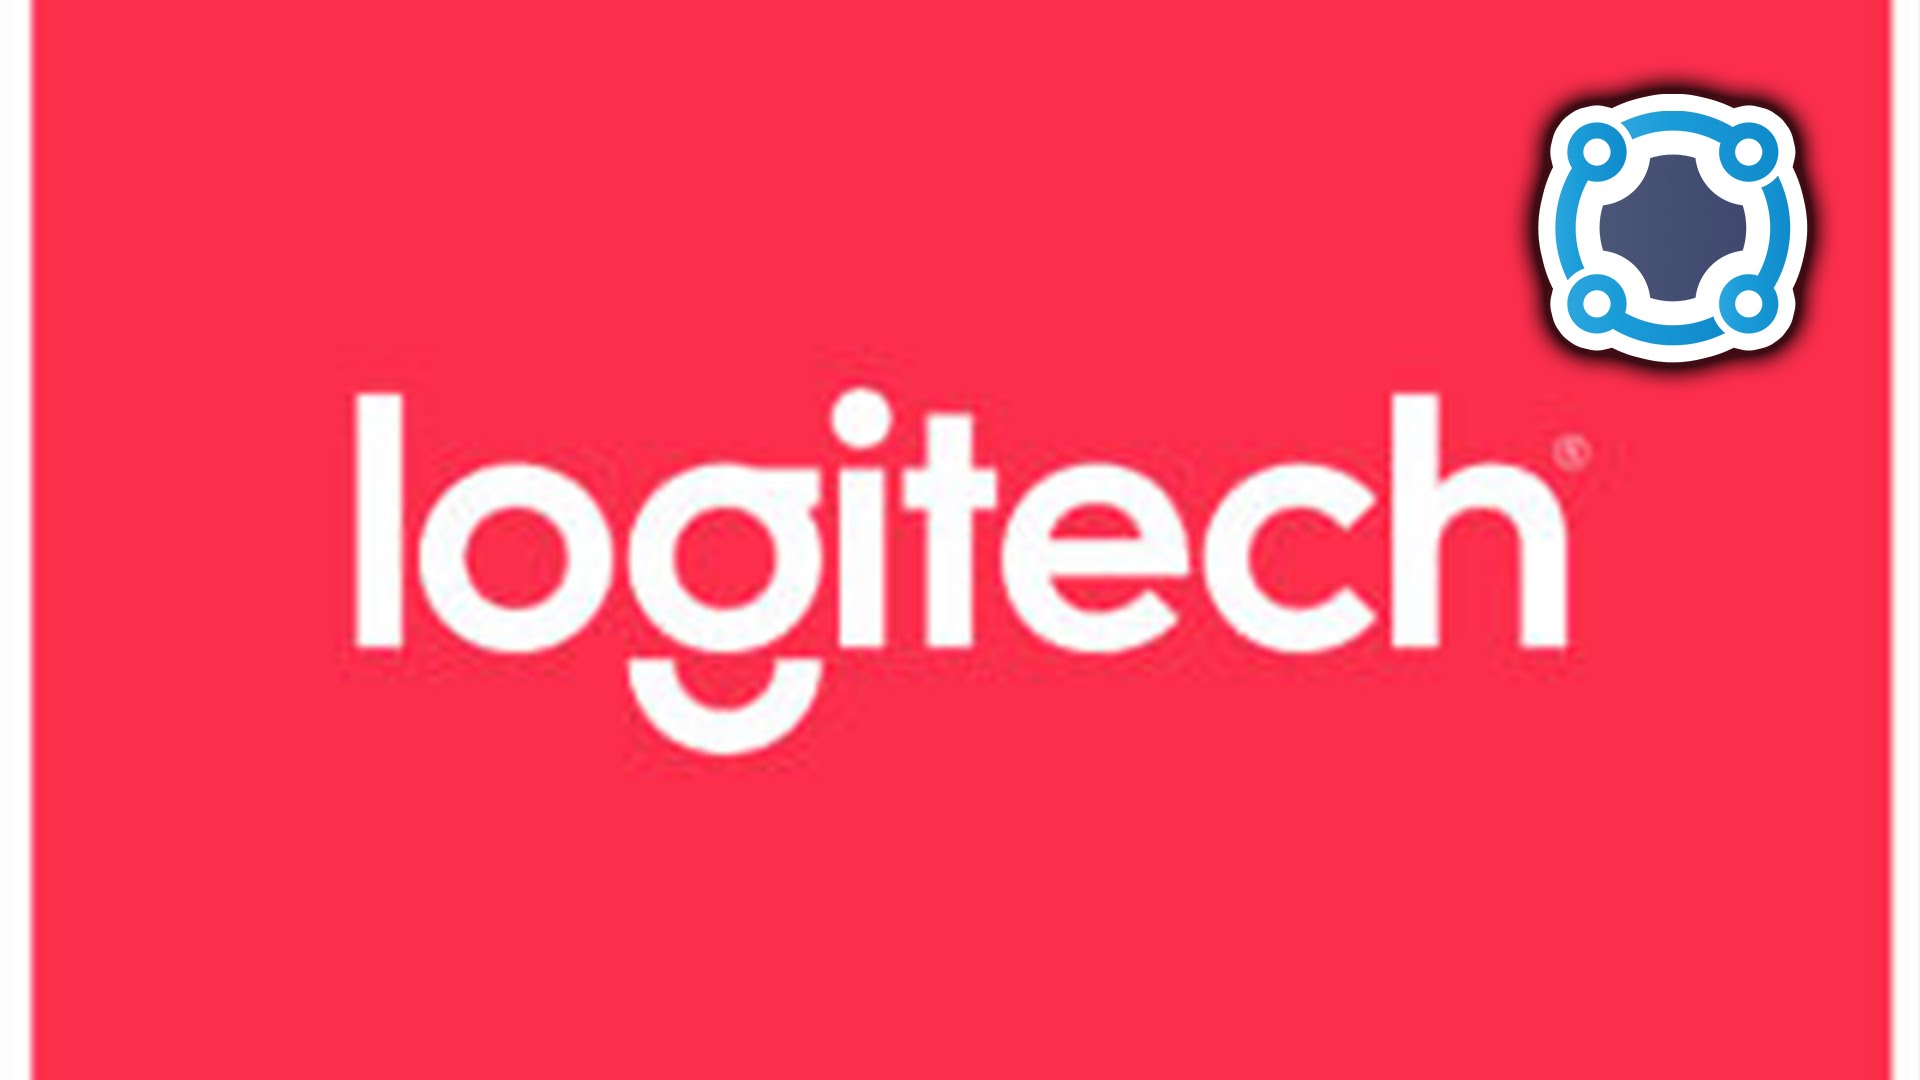 Logitech Changes Name to Logi